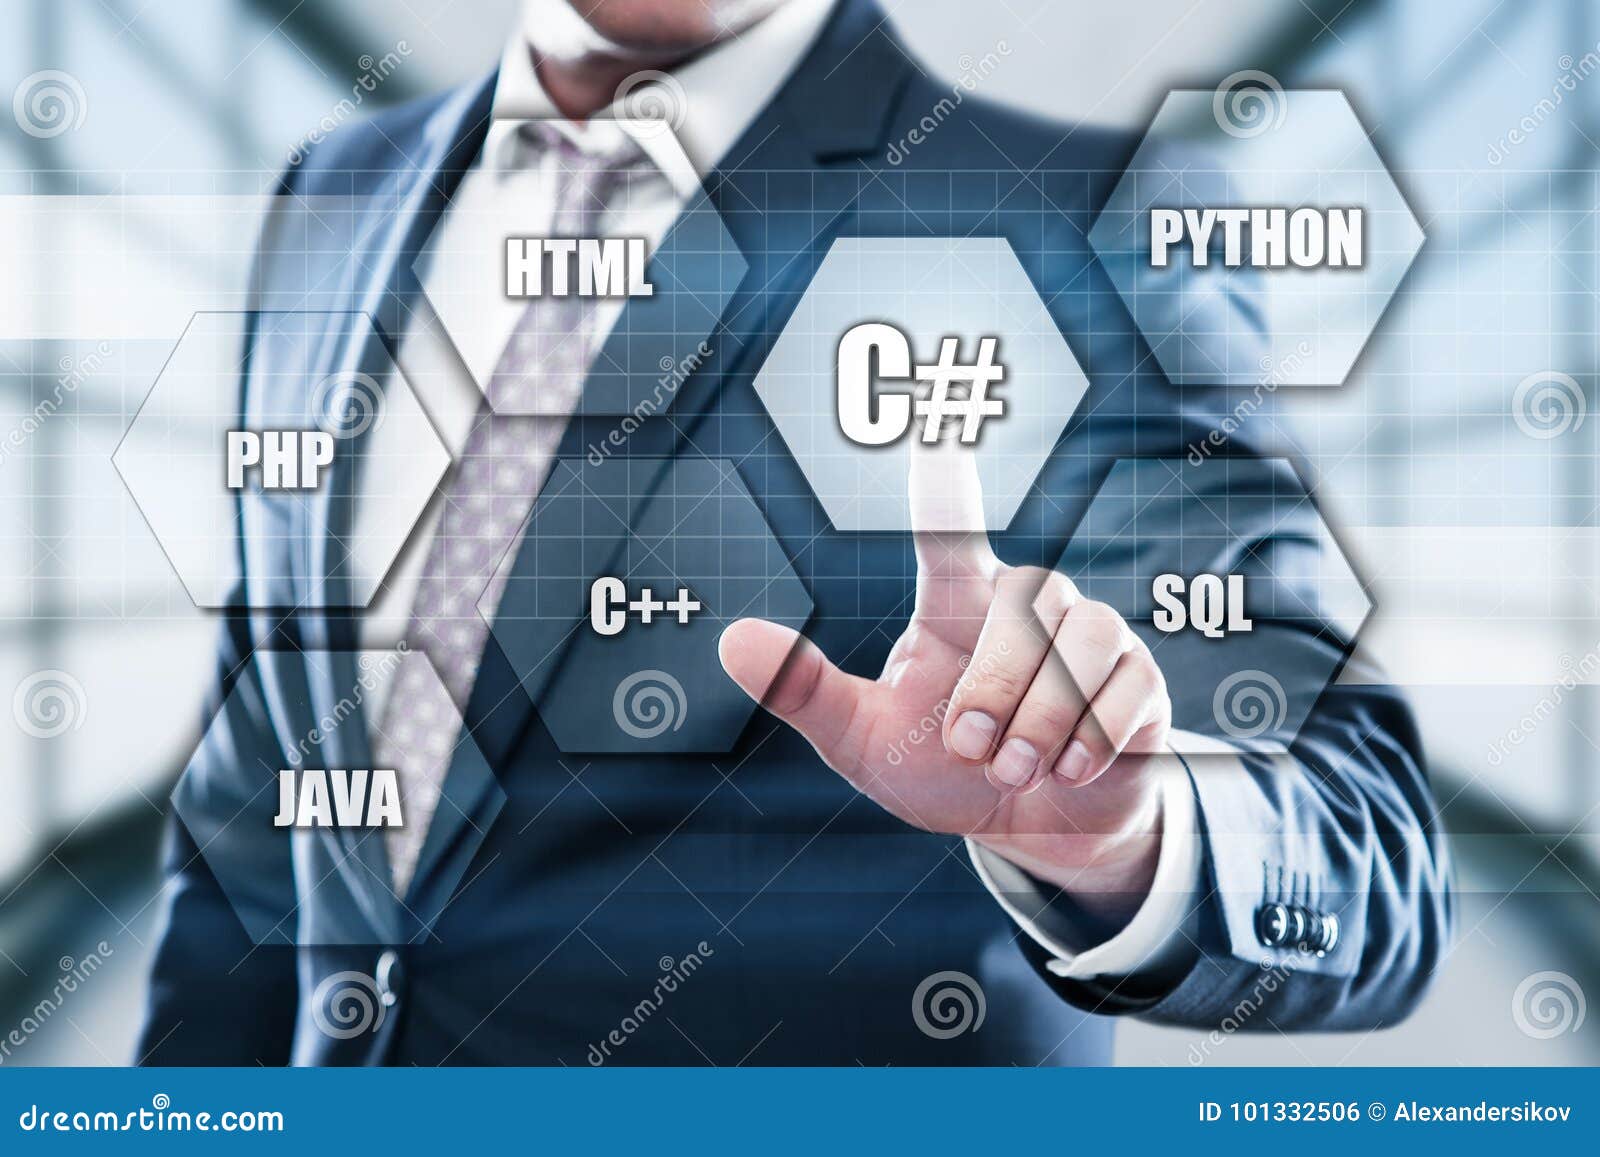 c sharp programming language web development coding concept